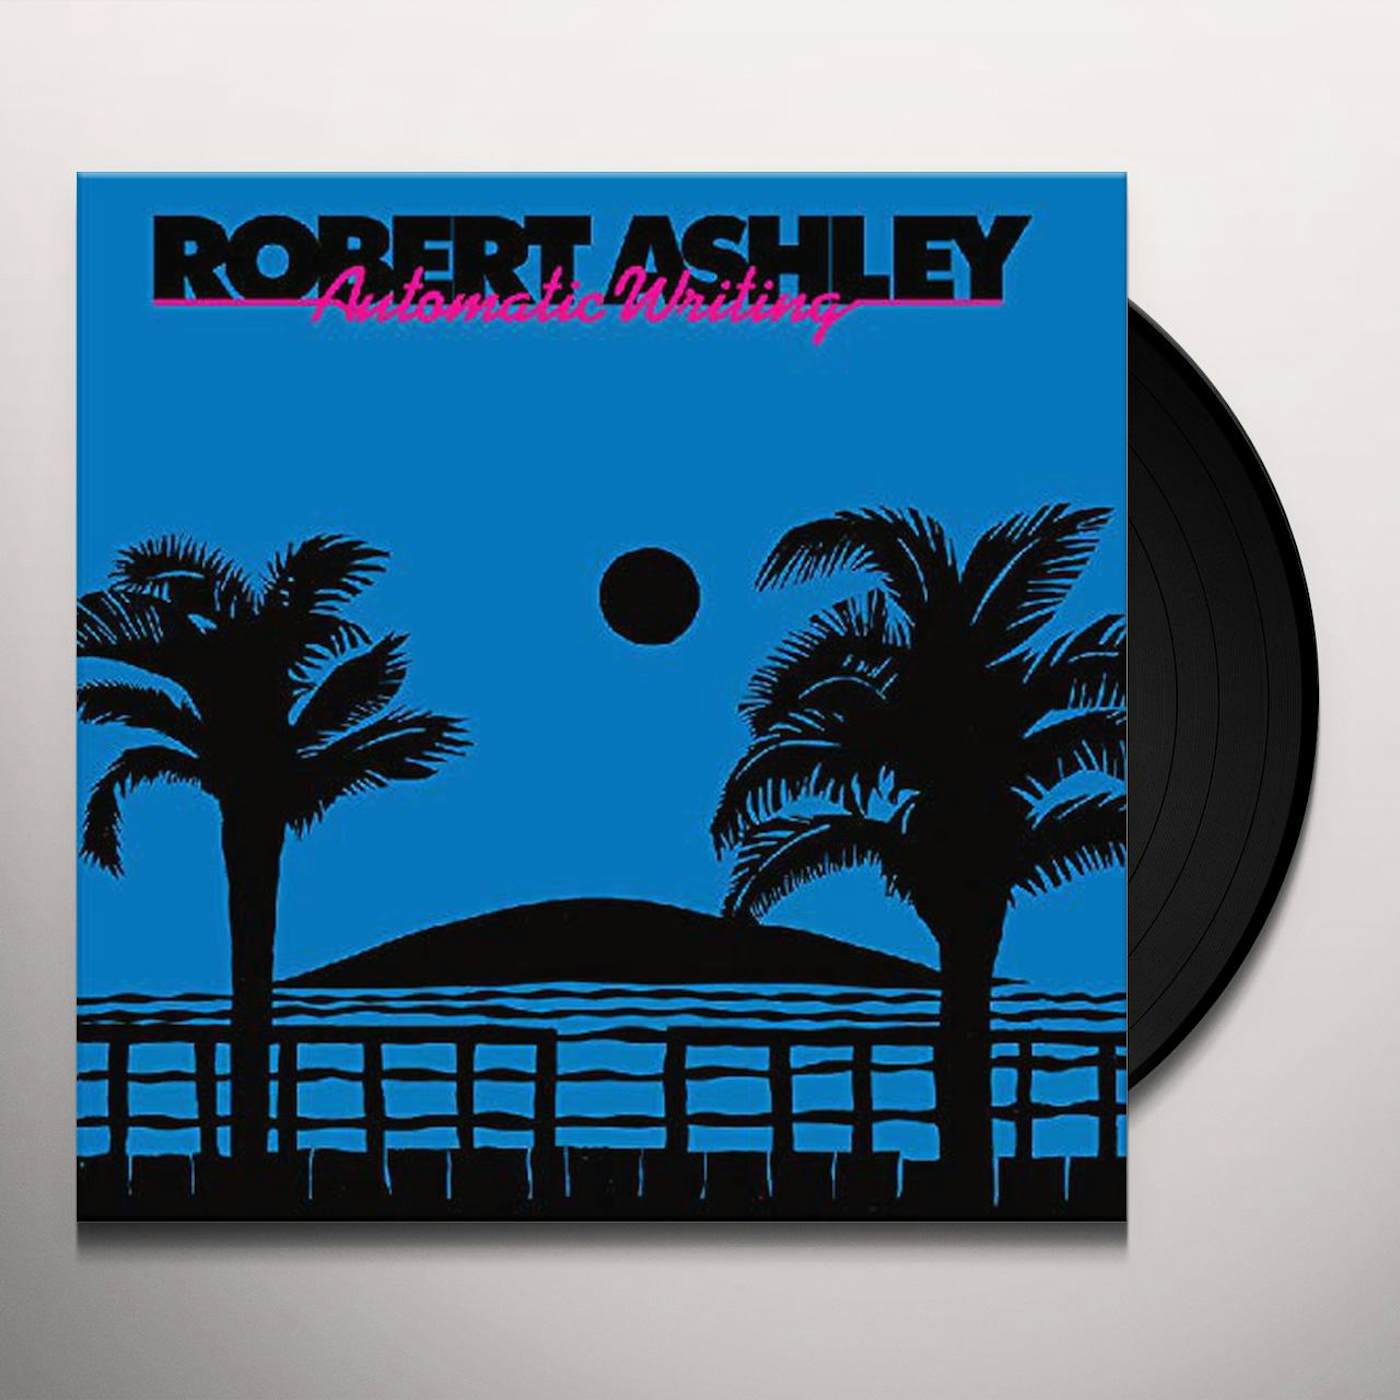 Robert Ashley Automatic Writing Vinyl Record